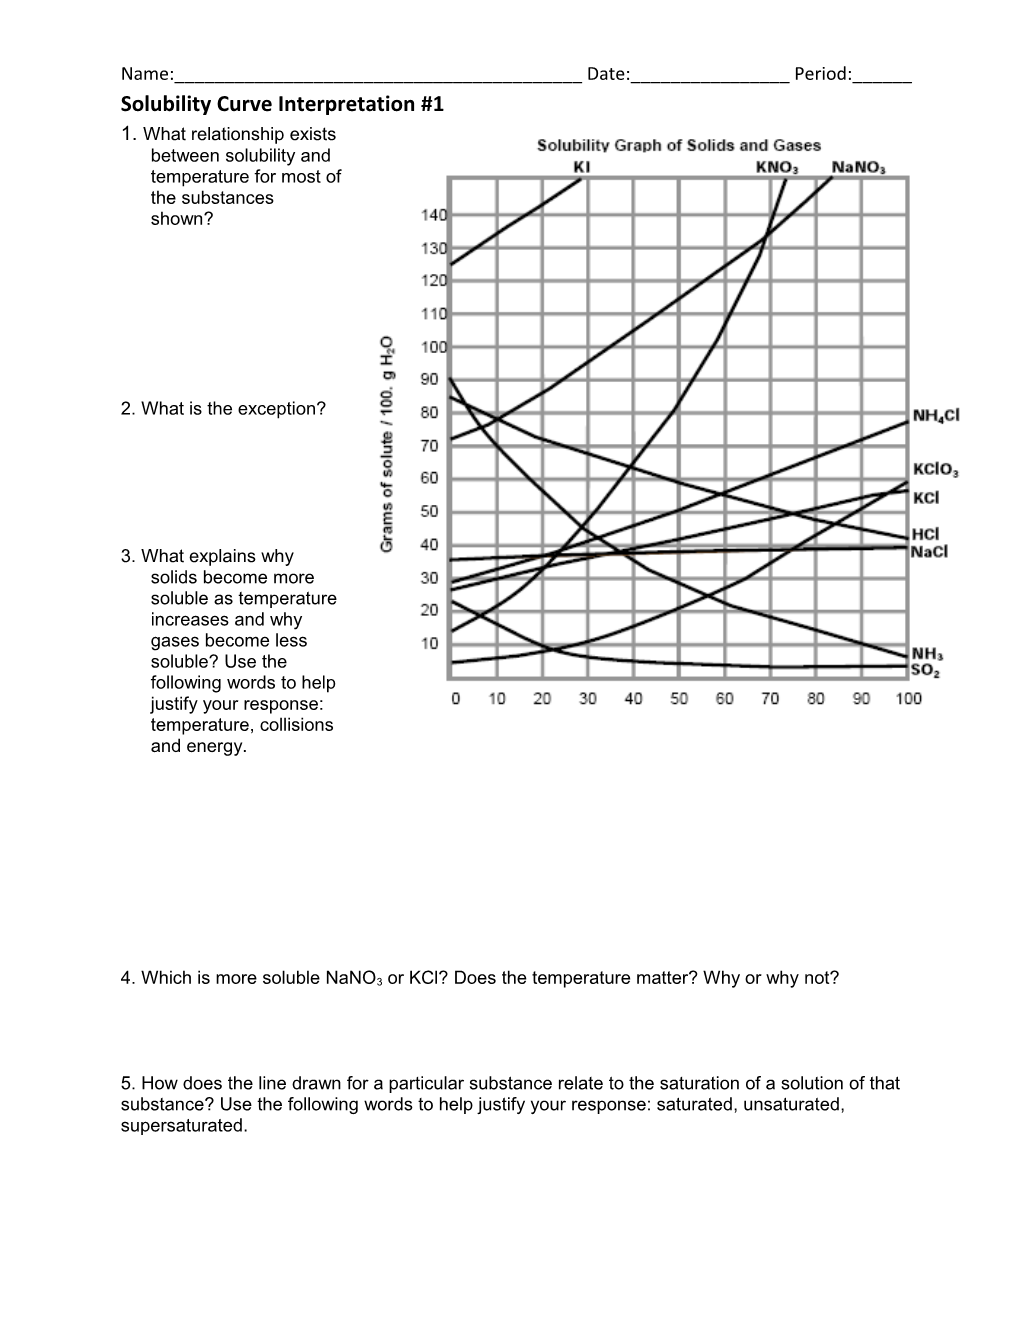 Solubility Curve Interpretation #1